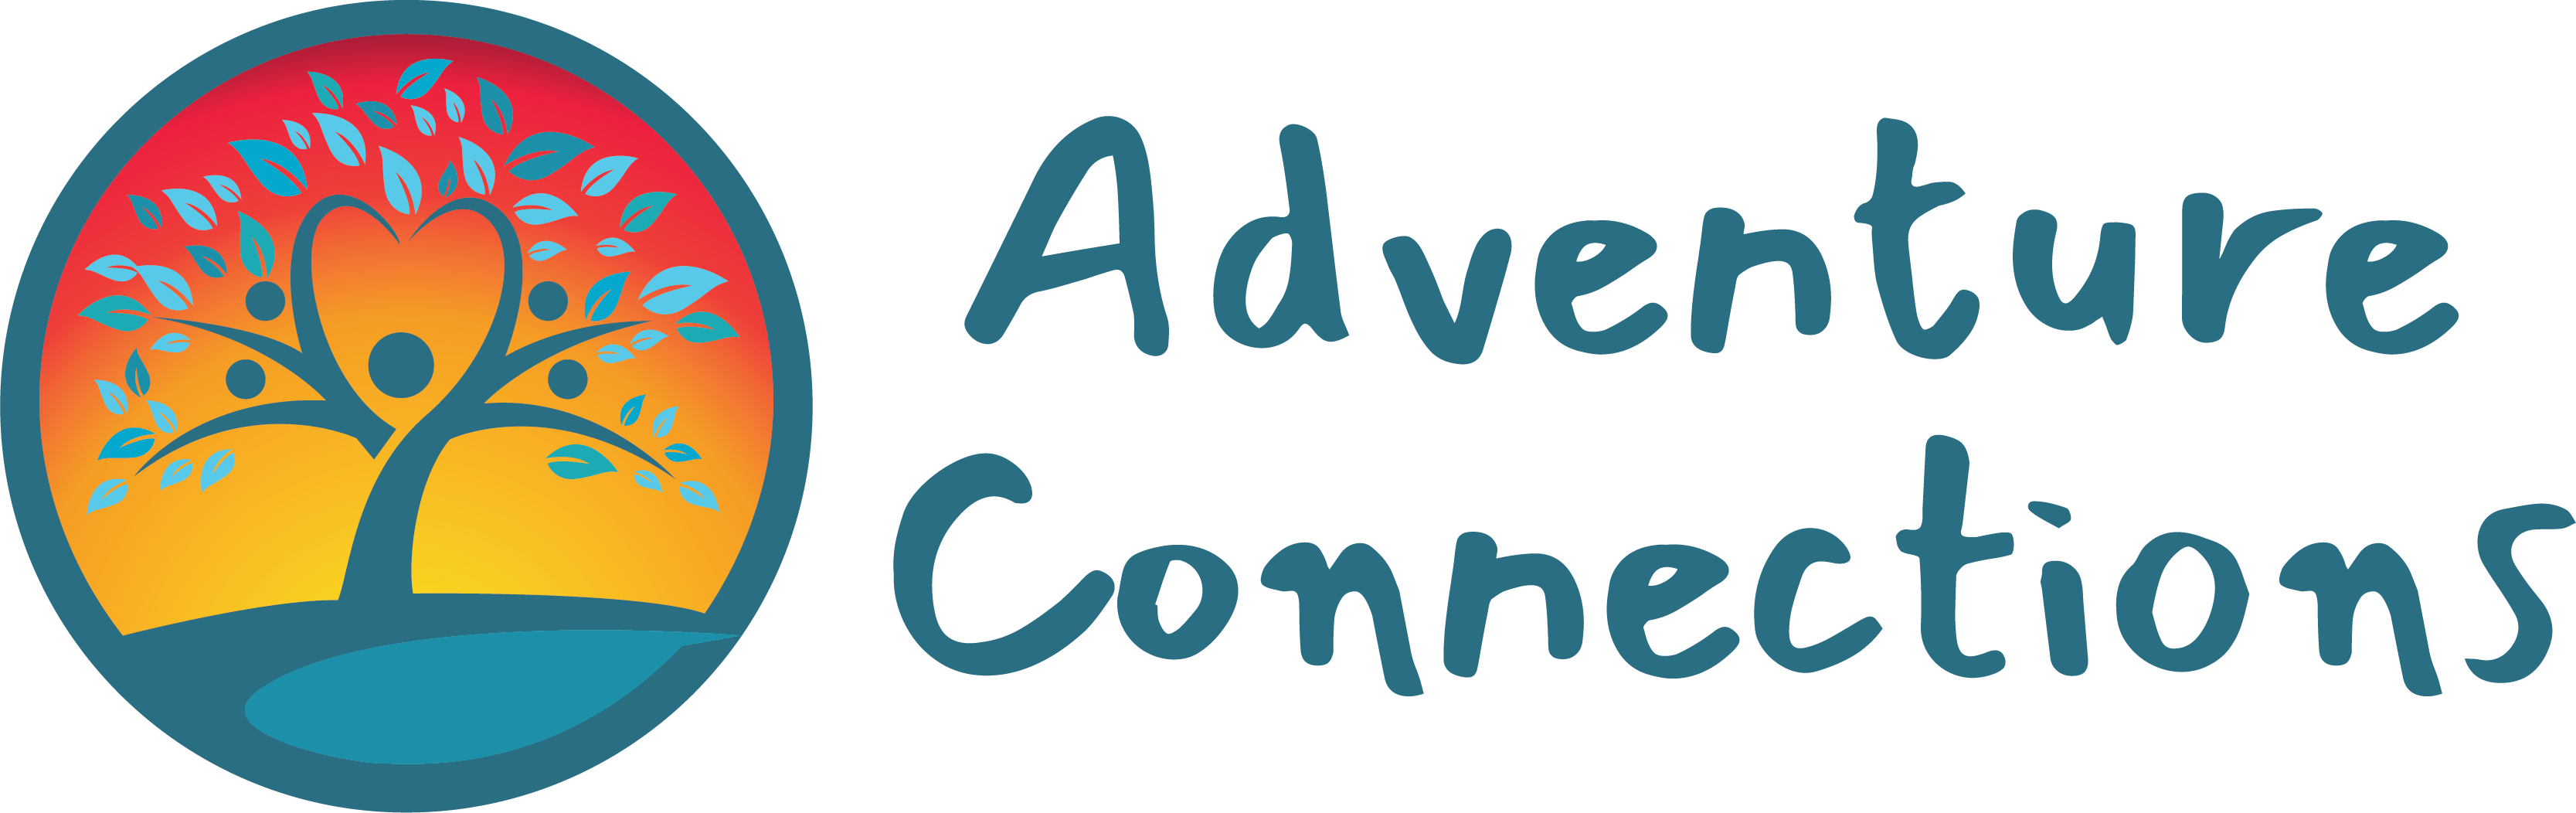 Adventure Connections_logo